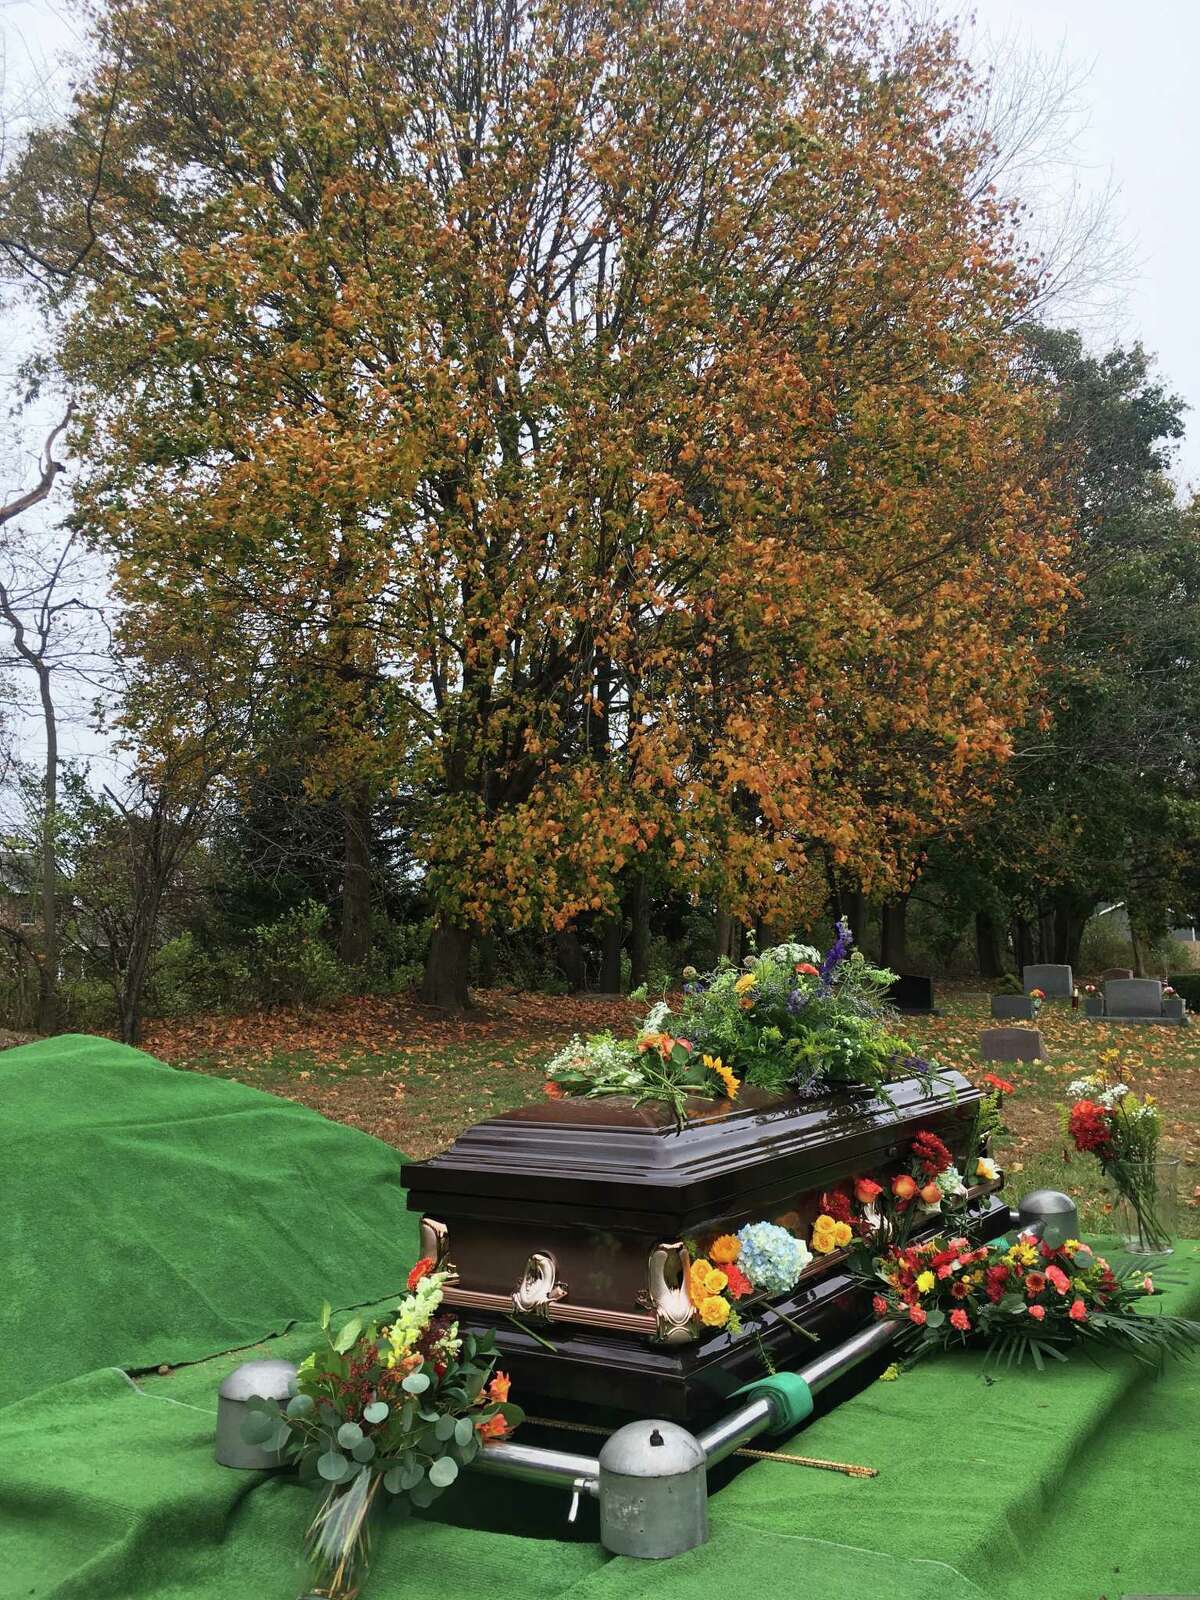 Chris Bramah's grave in Kinderhook Cemetery on Nov. 4, 2019. (Steve Barnes/Times Union.)